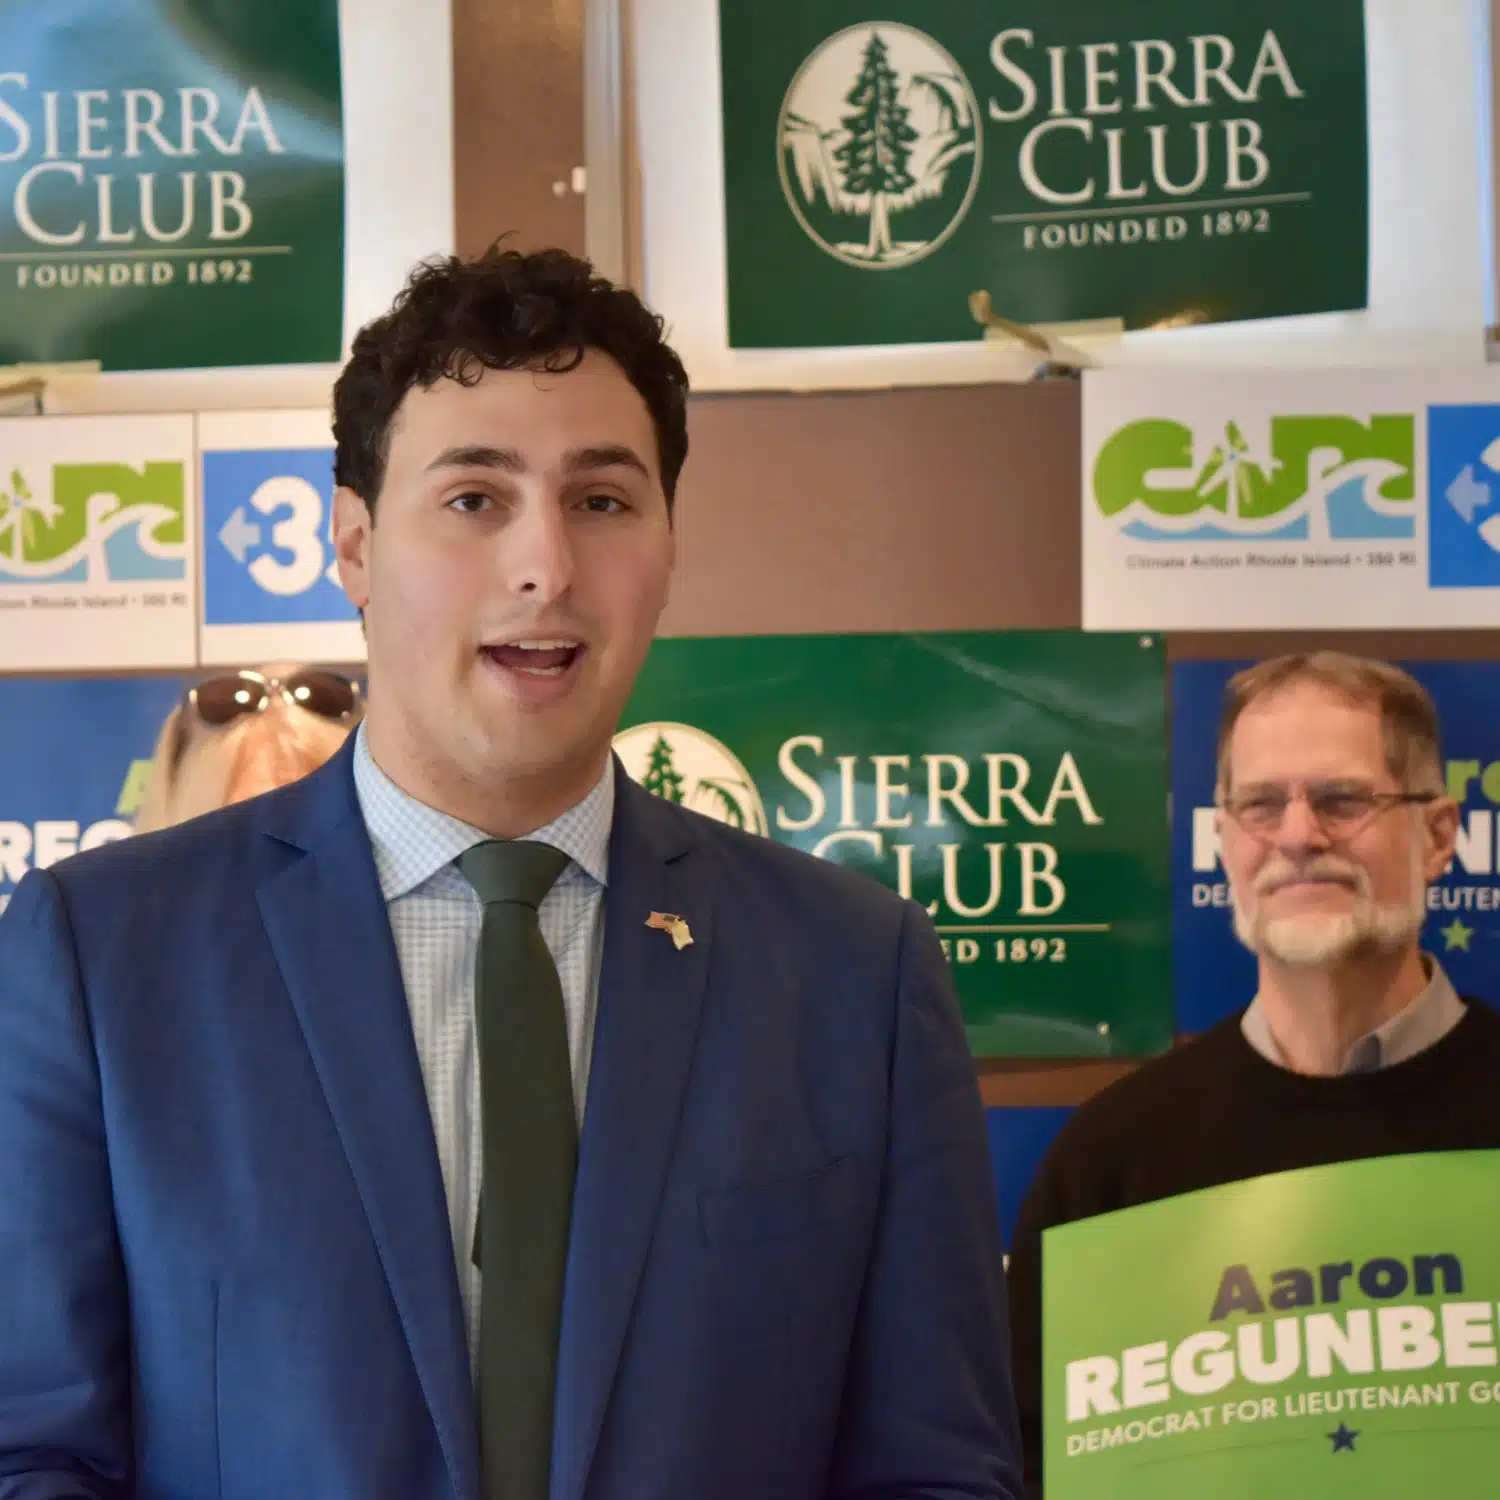 Regunberg picks up three early environmental group endorsements in Lieutenant Governor bid